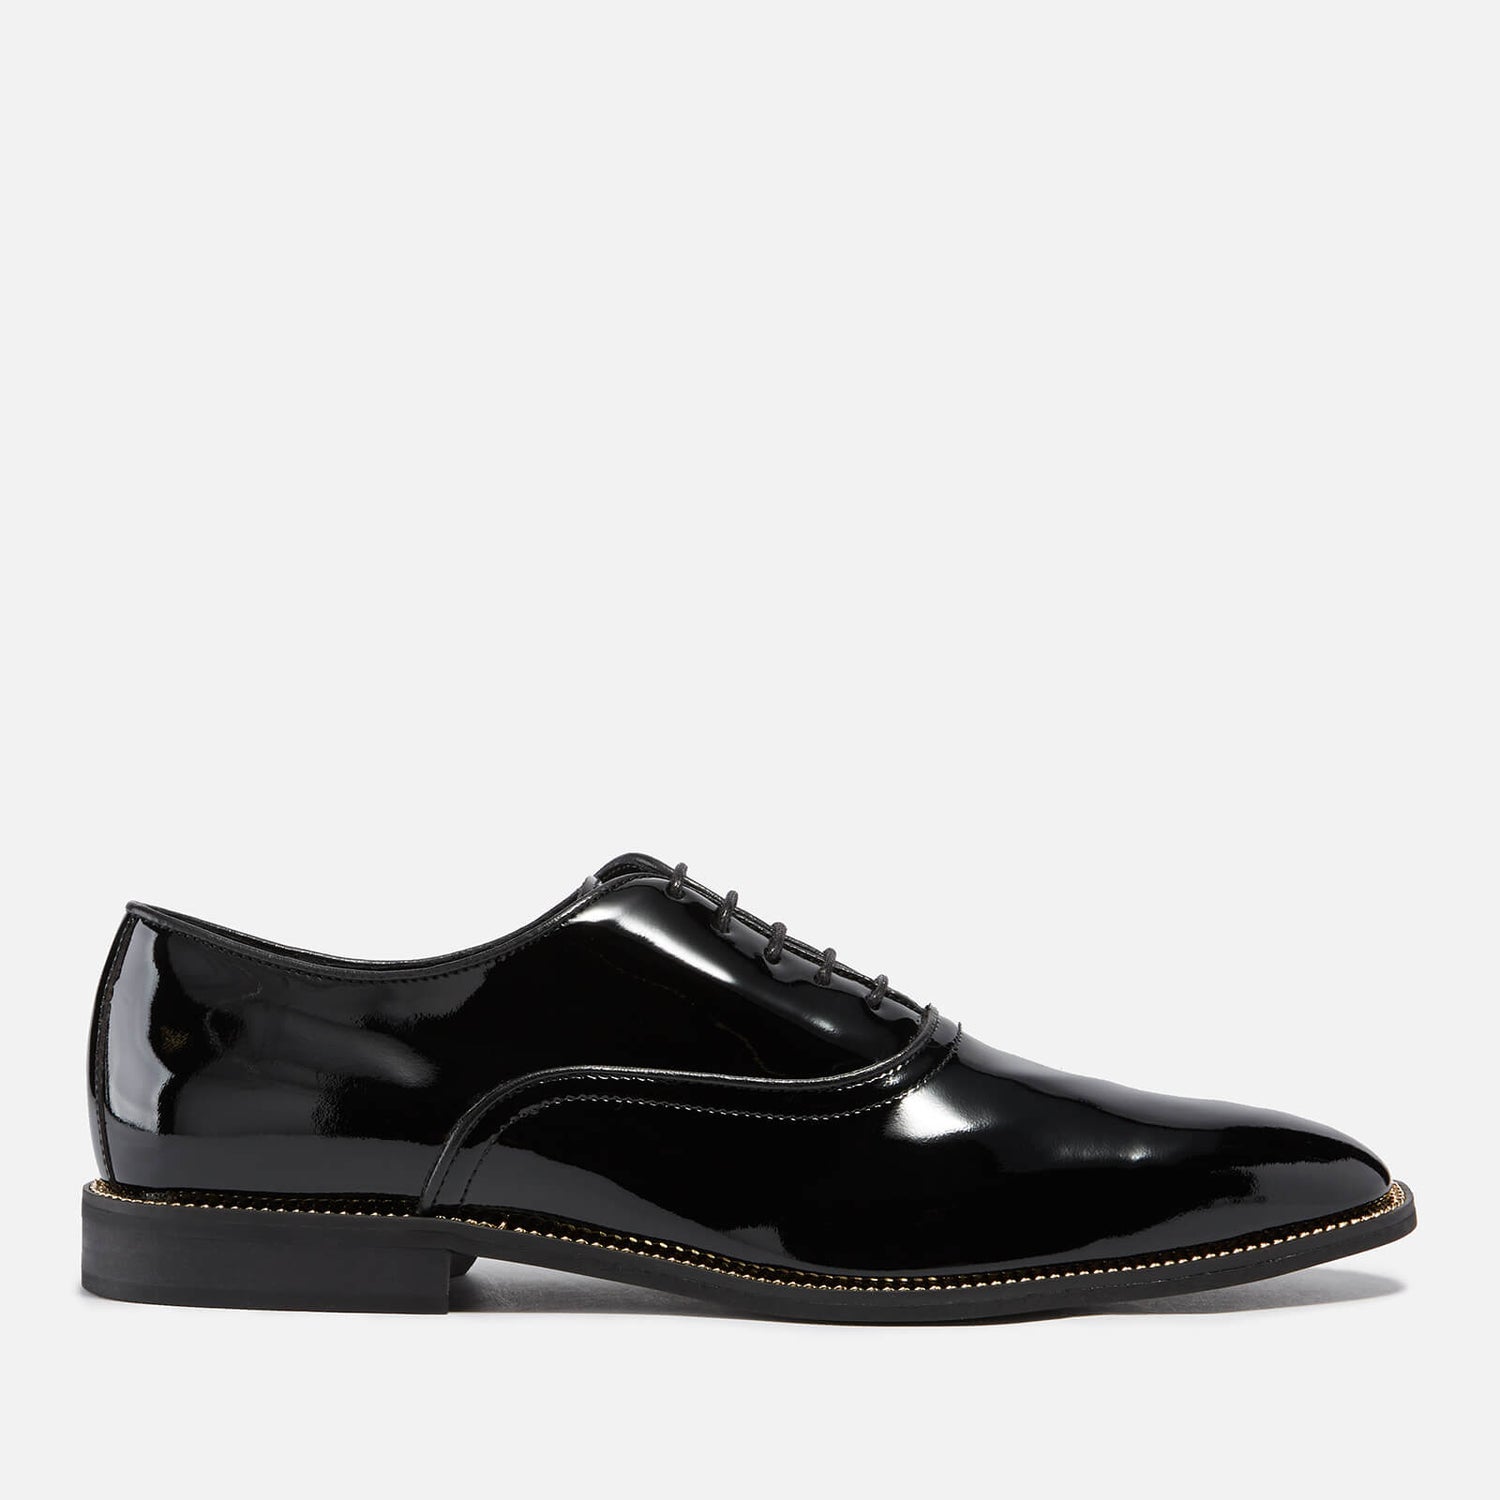 Kurt Geiger London Sloane Embellished Patent-Leather Oxford Shoes